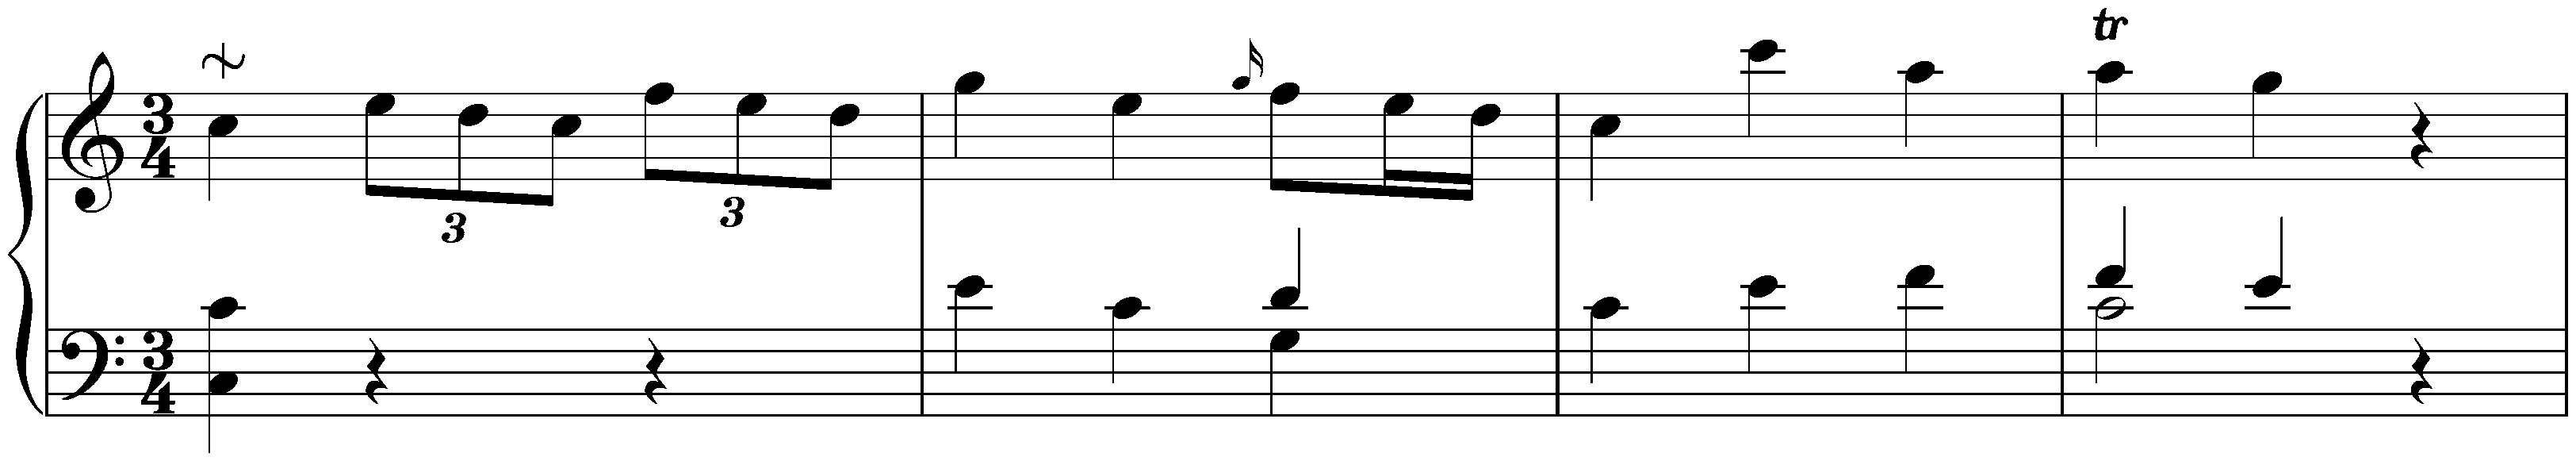 Sonata in C major, Hob. XVI:10; 2. Menuet – Trio